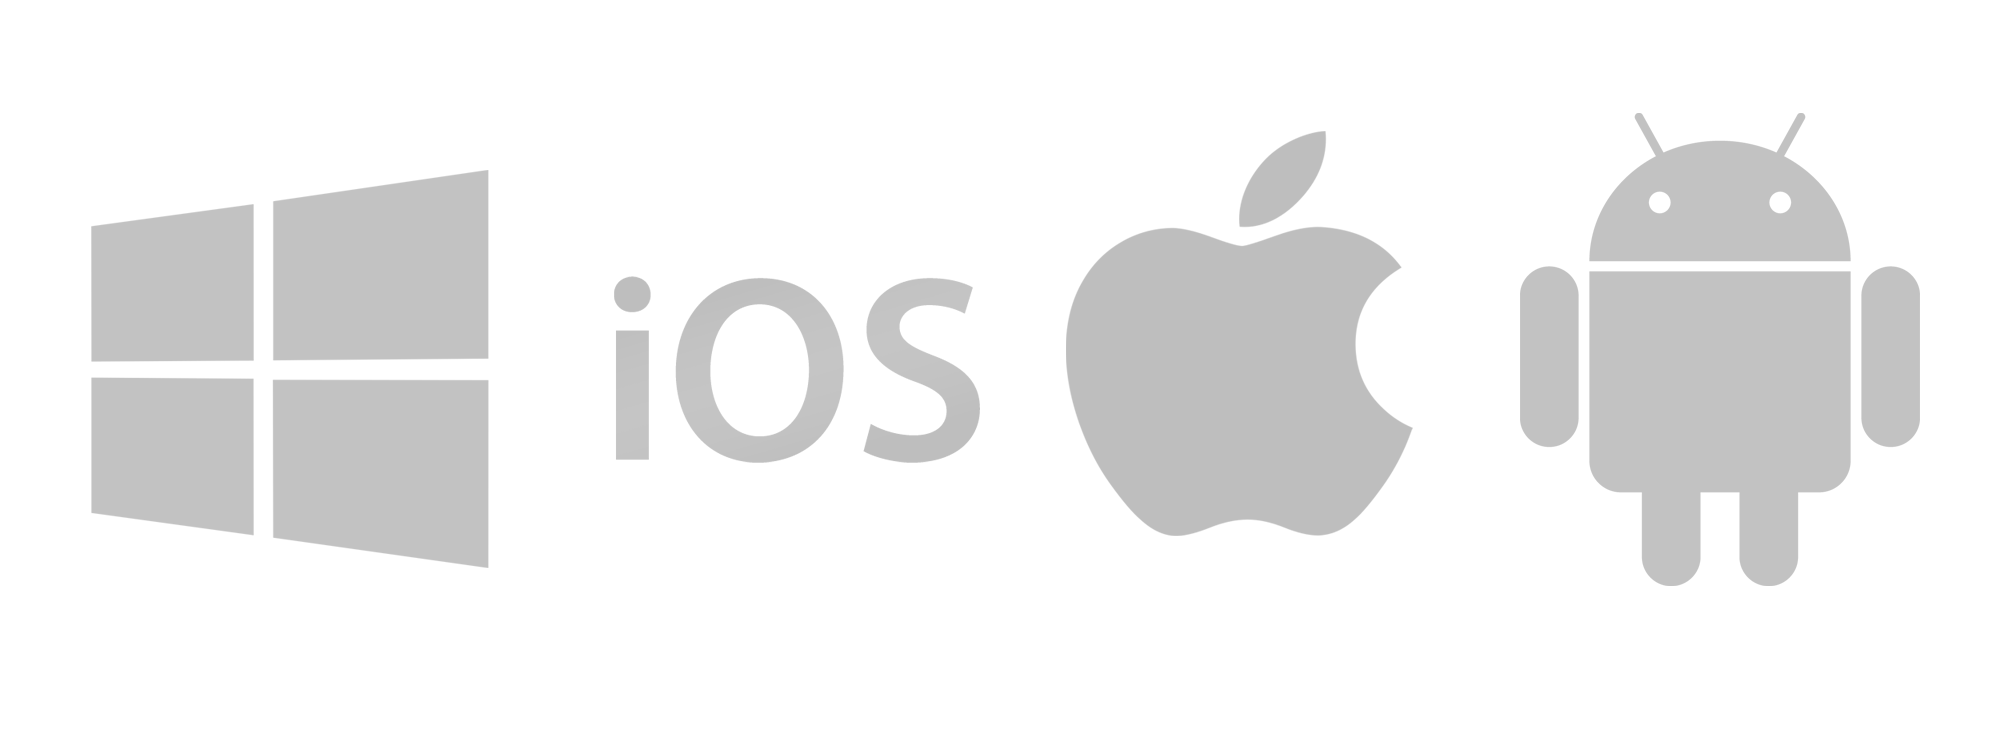 Habit App Ios And Mac Os